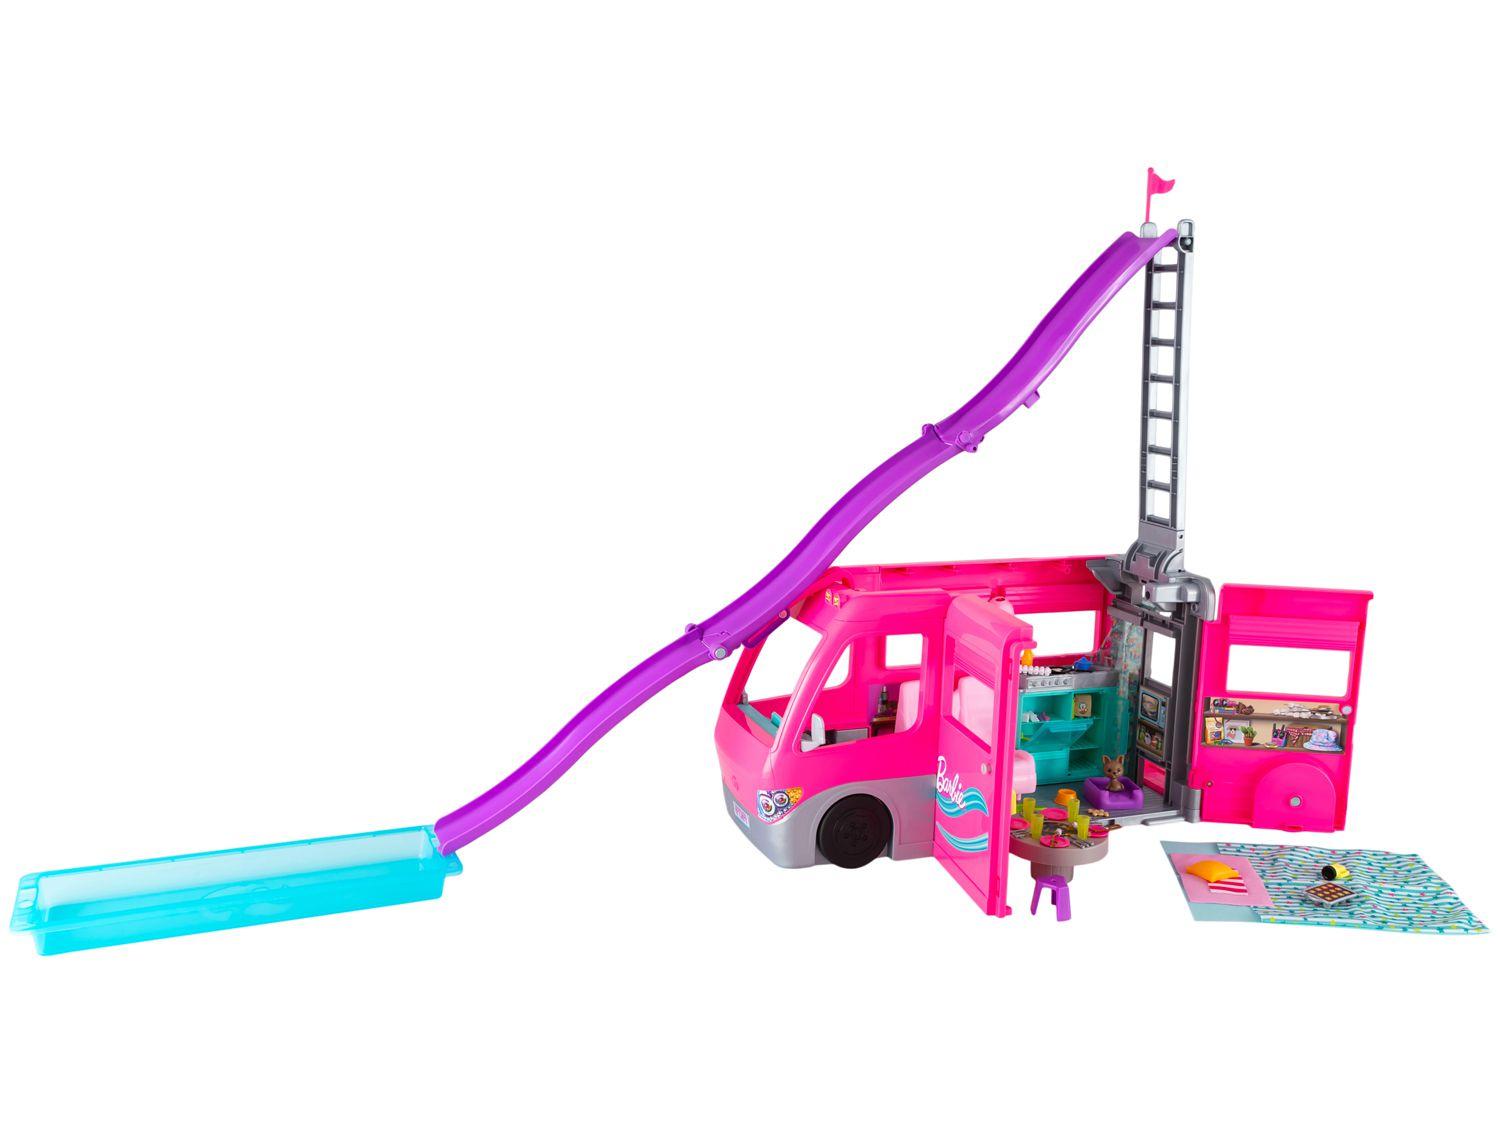 Playset Barbie - Trailer dos Sonhos - Mattel - superlegalbrinquedos